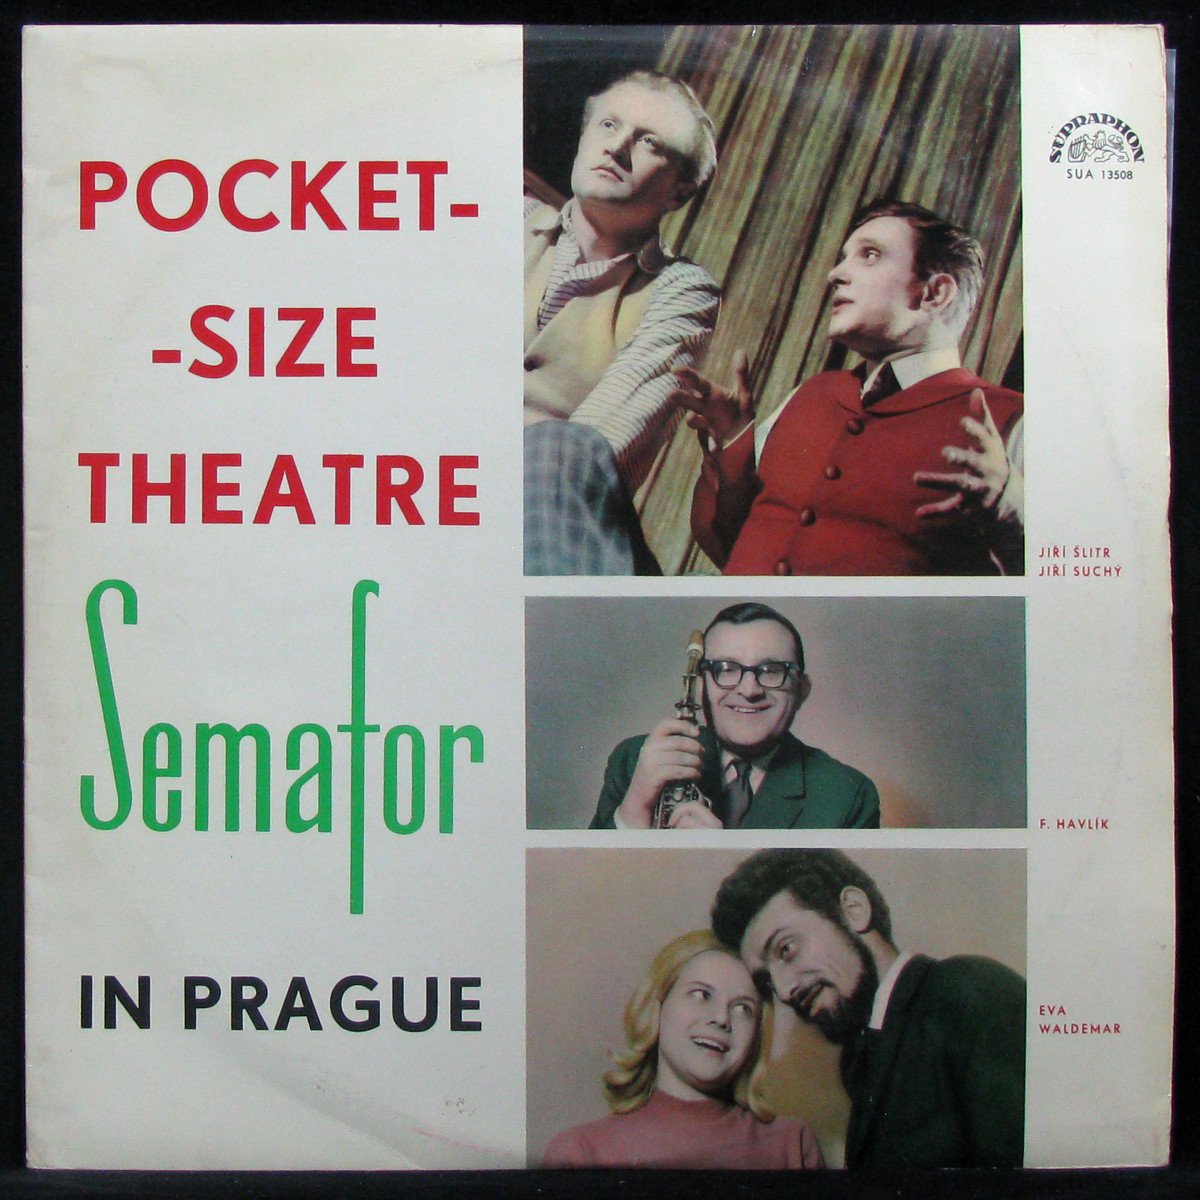 LP Ferdinand Havlik Orchestra — Pocket-Size Theatre Semafor In Prague (mono) фото